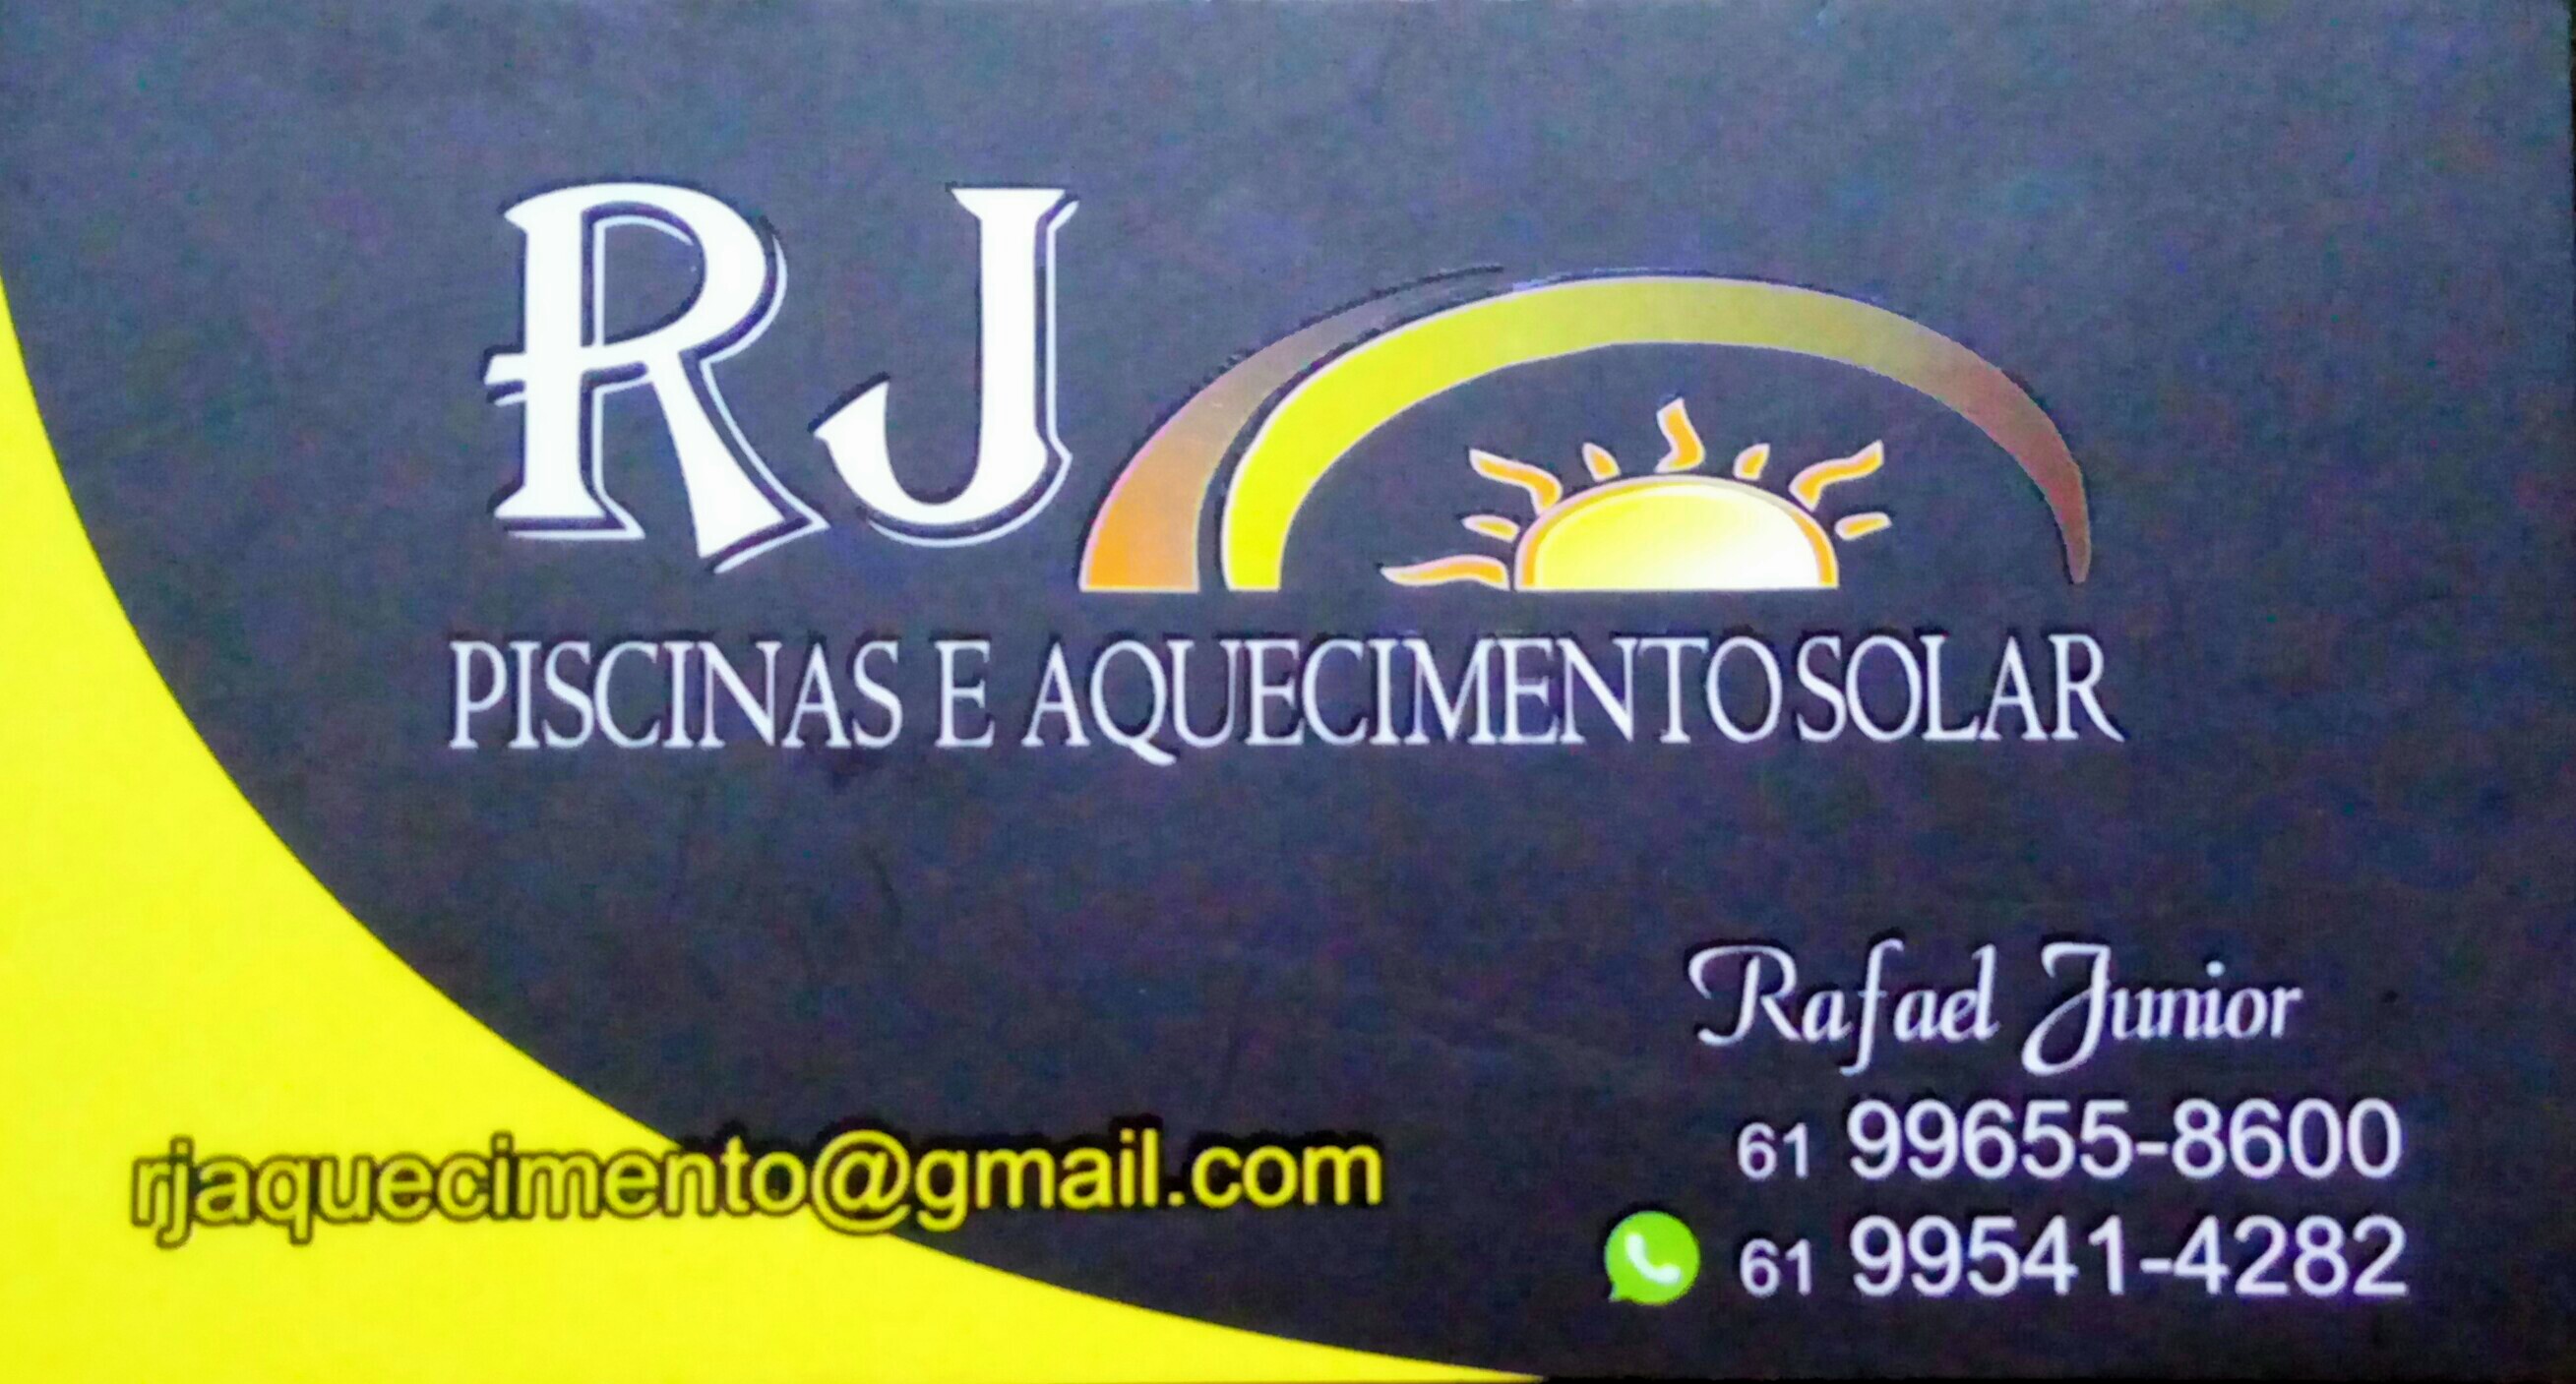 RJ AQUECIMENTO SOLAR PISCINA - Energia Solar - Equipamentos - Brasília, DF